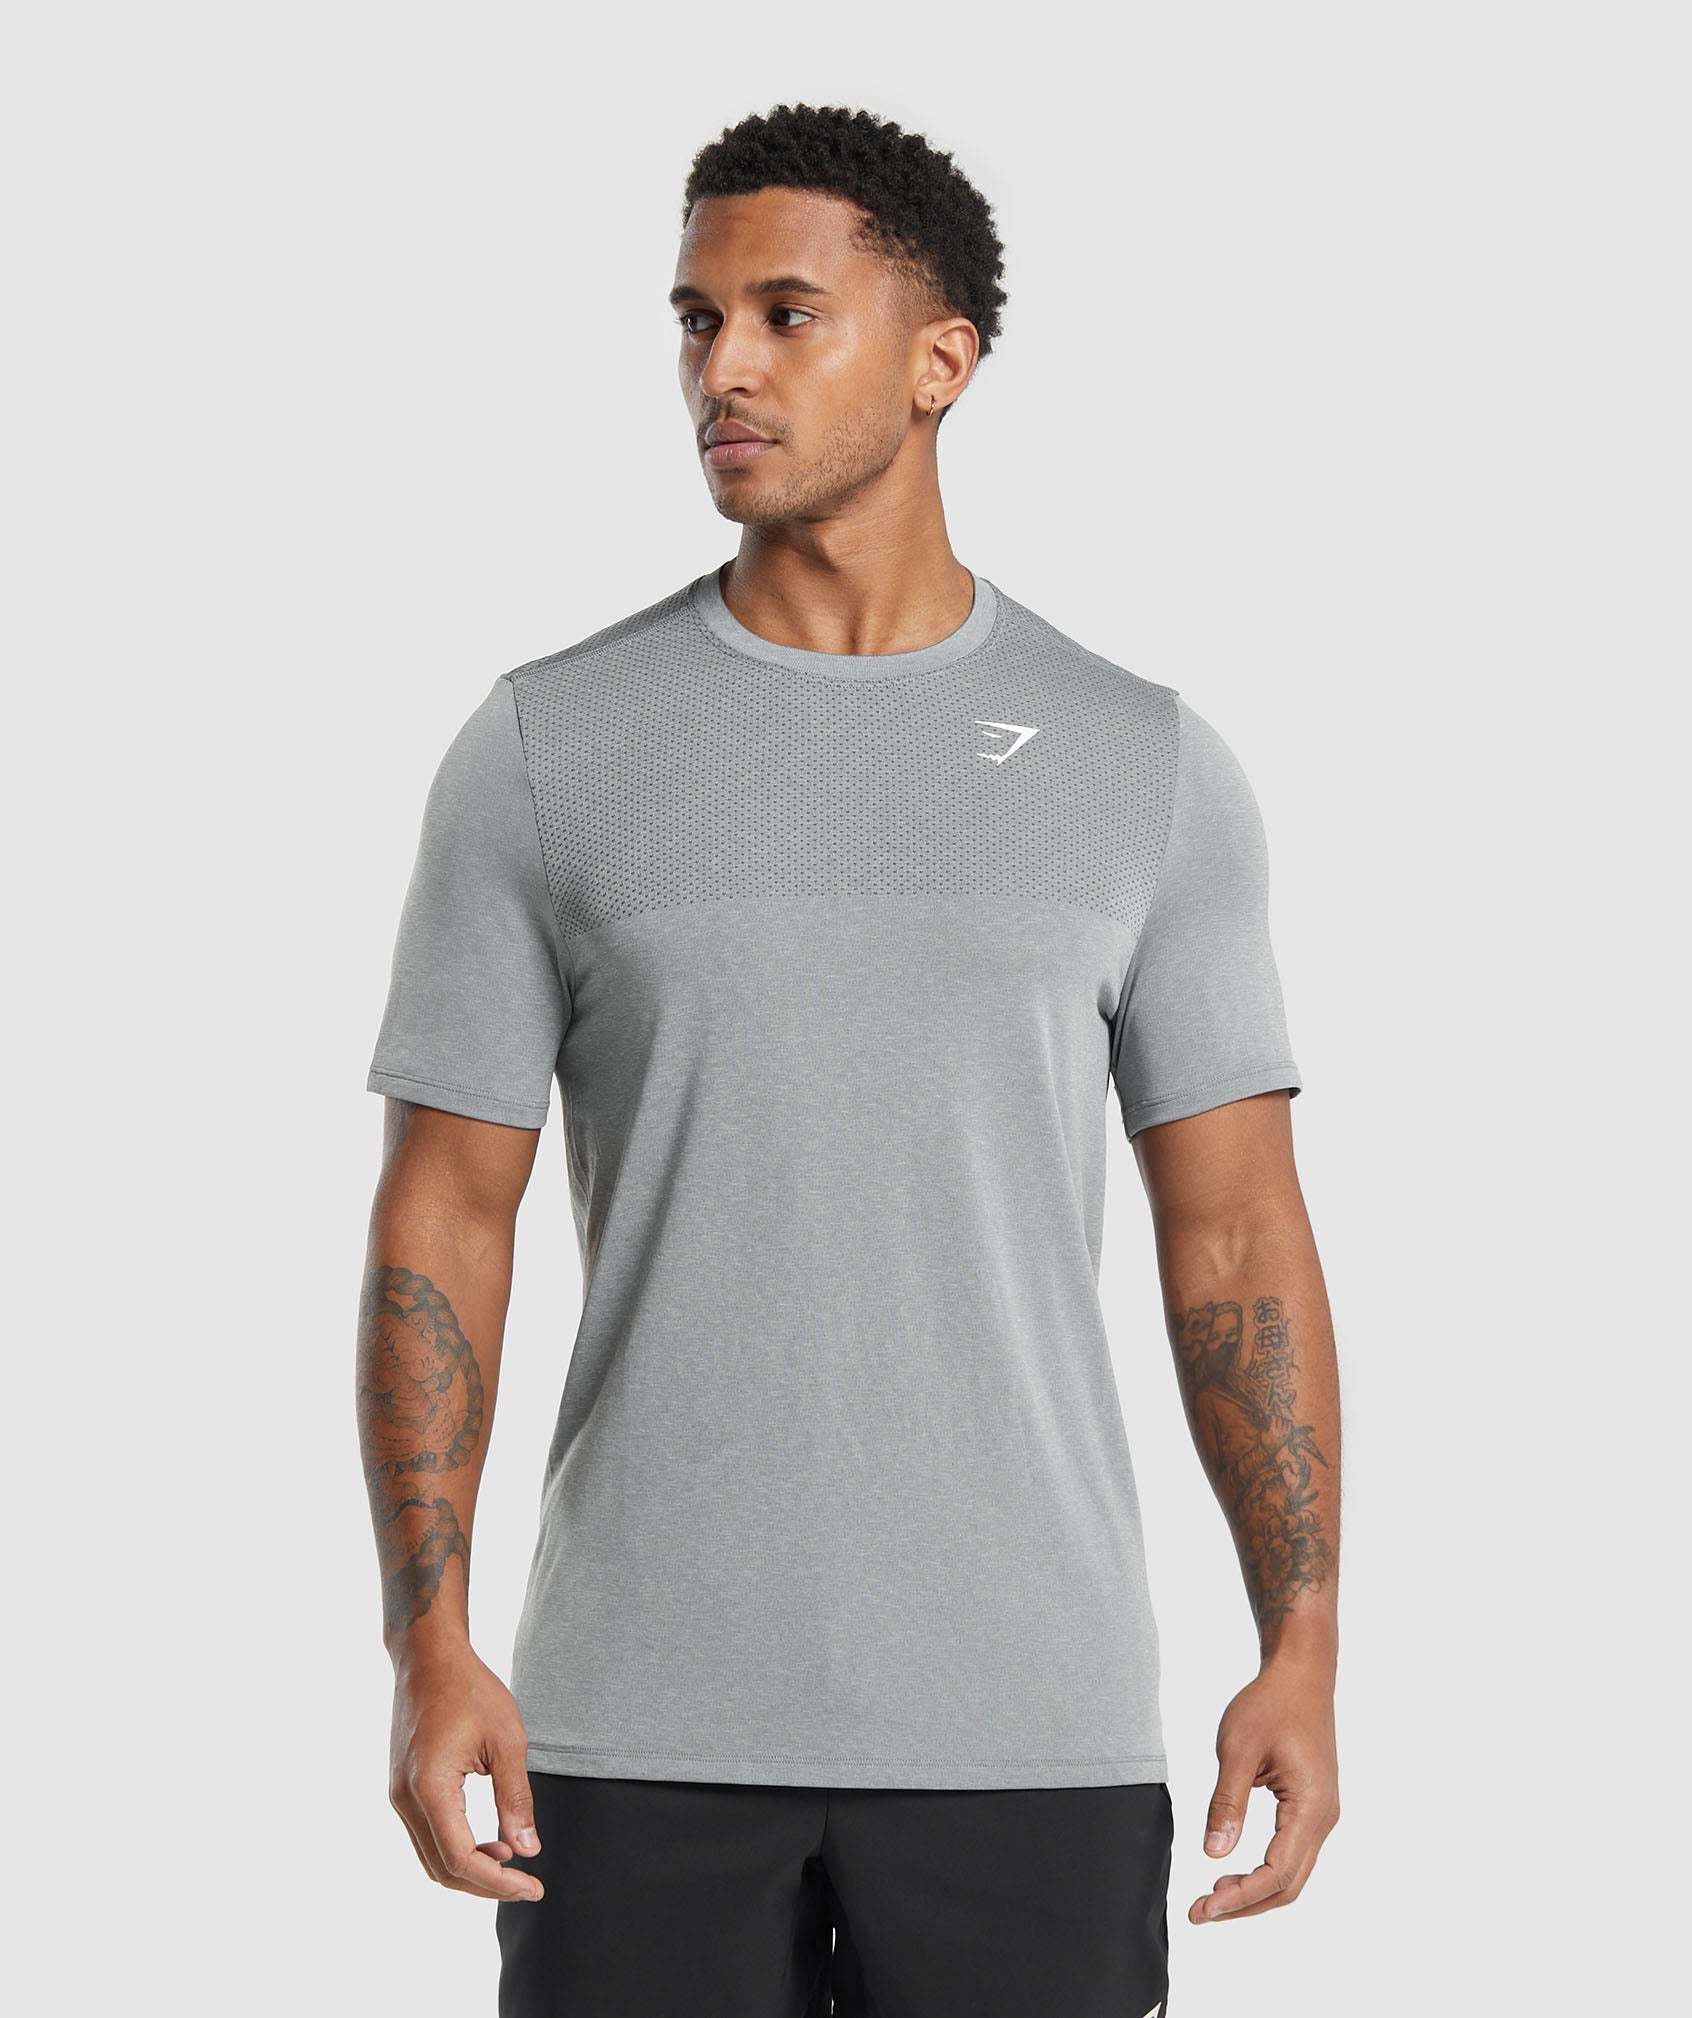 Vital Seamless T-Shirt in Light Grey/Black Marl - view 1